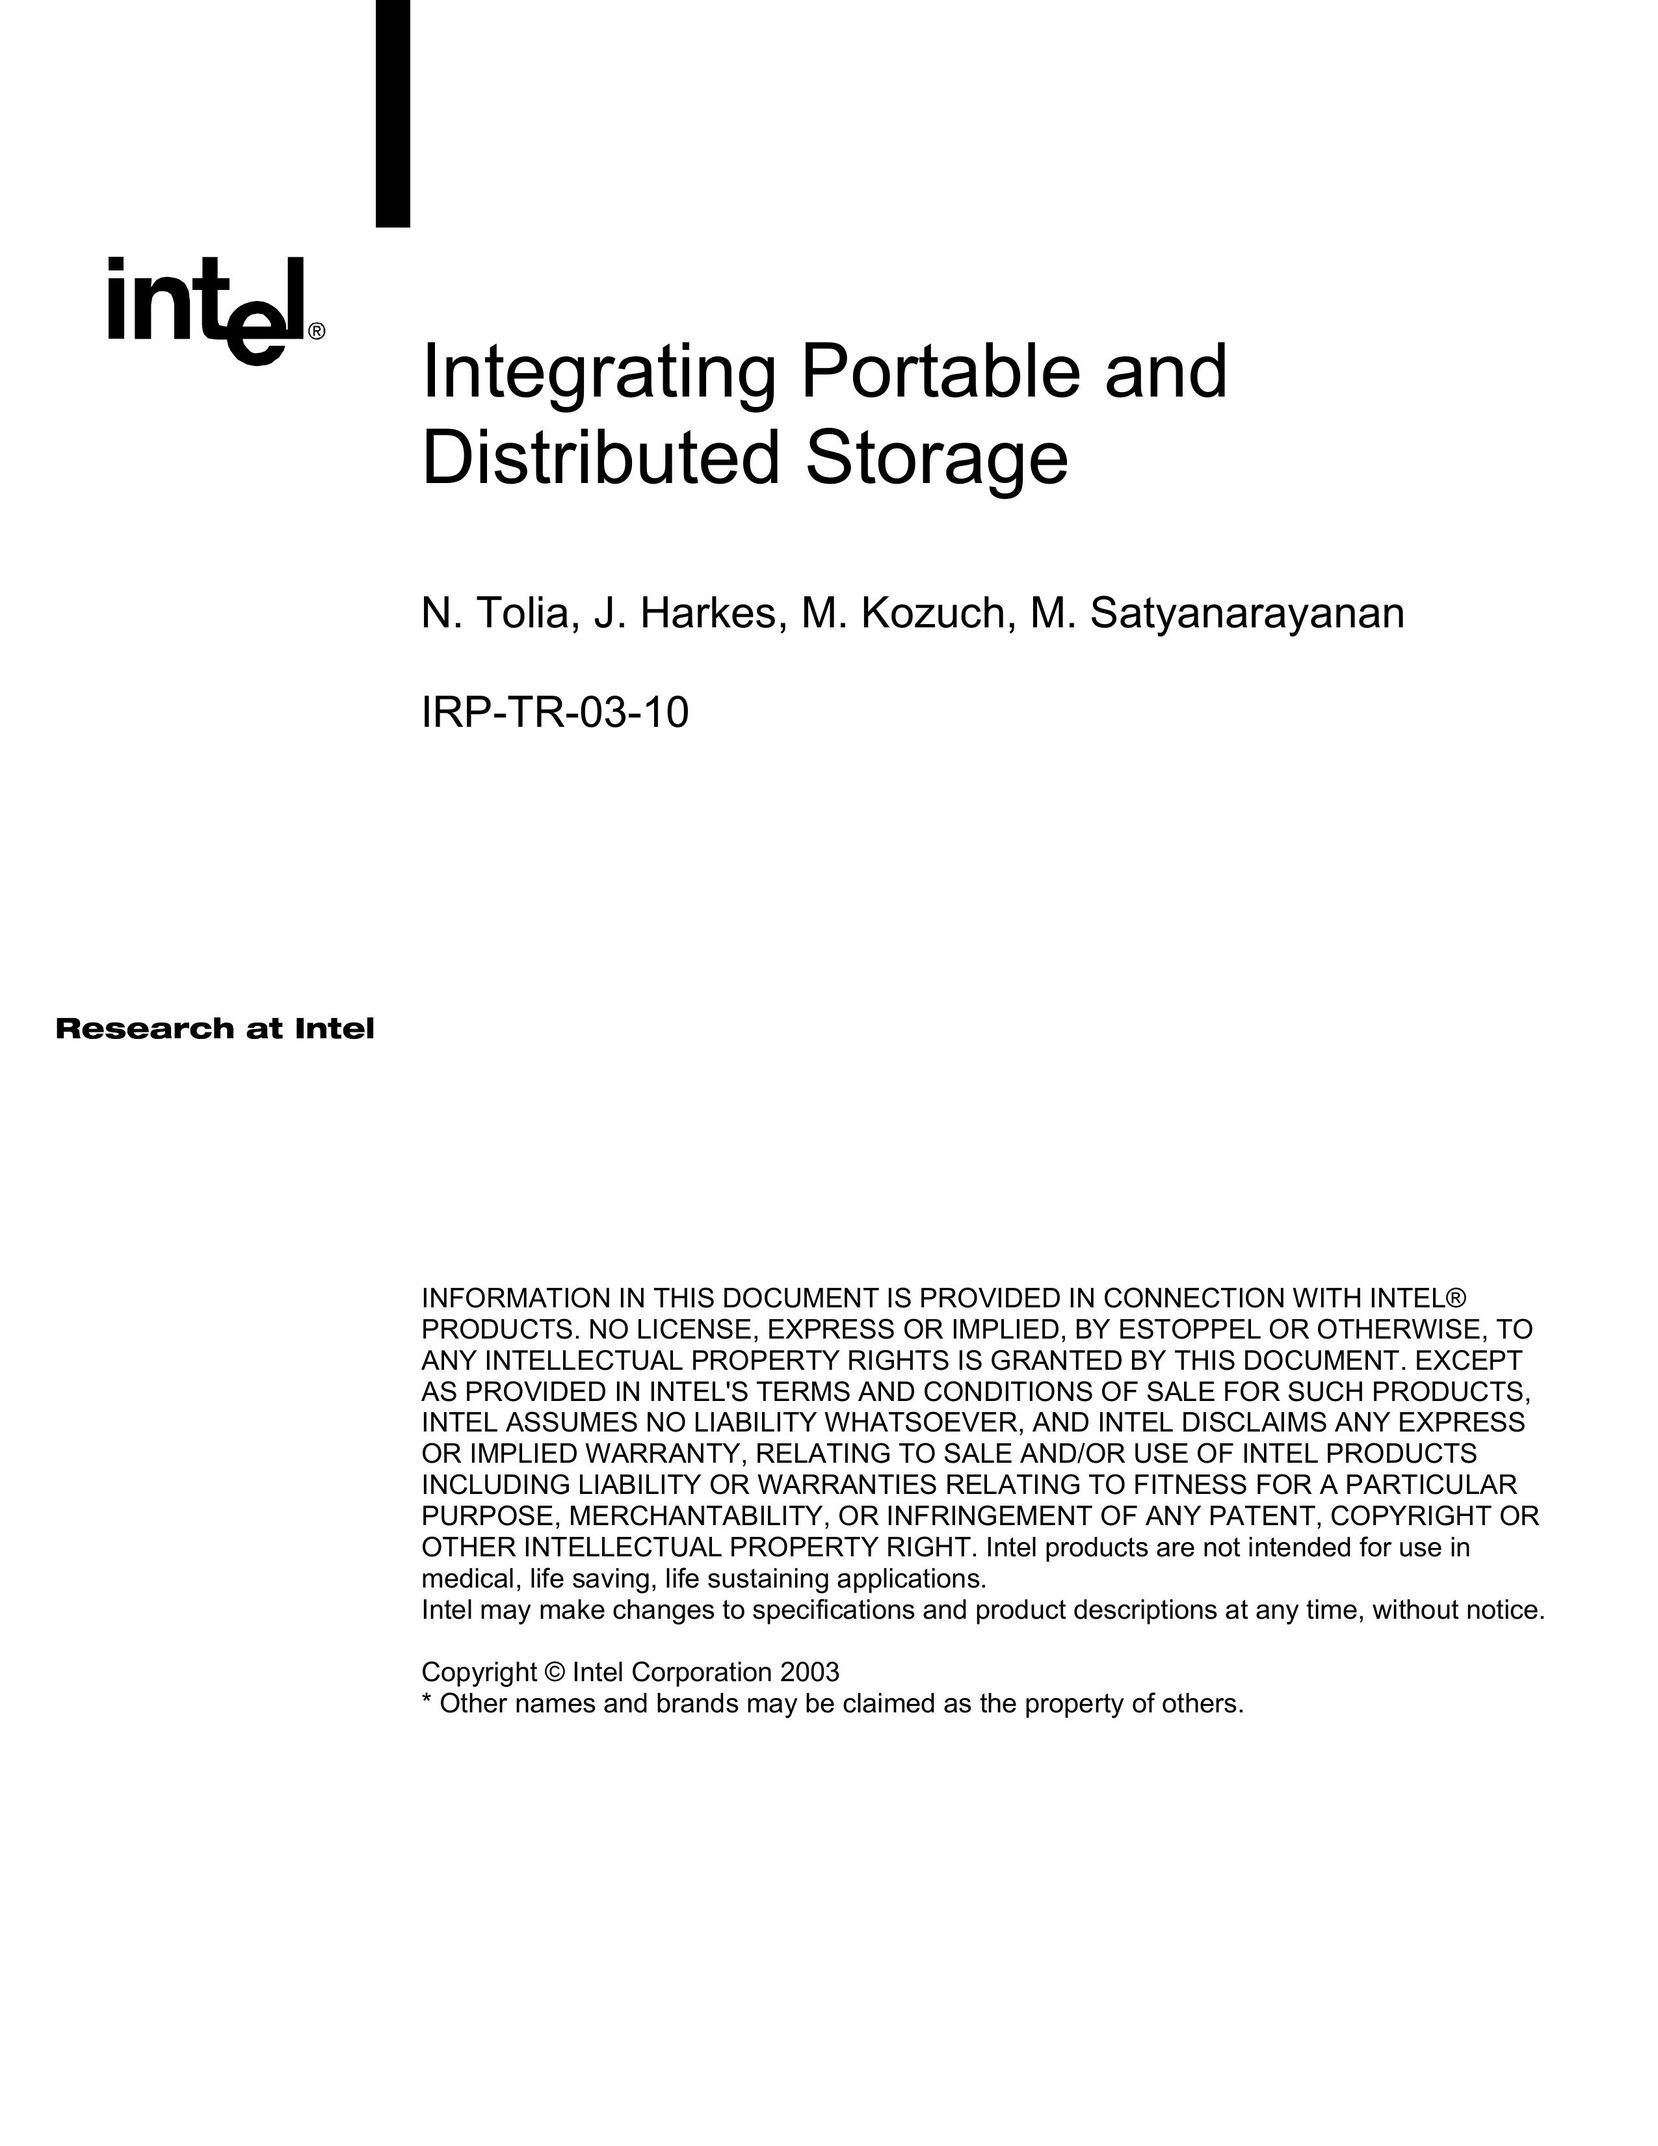 Intel IRP-TR-03-10 Computer Drive User Manual